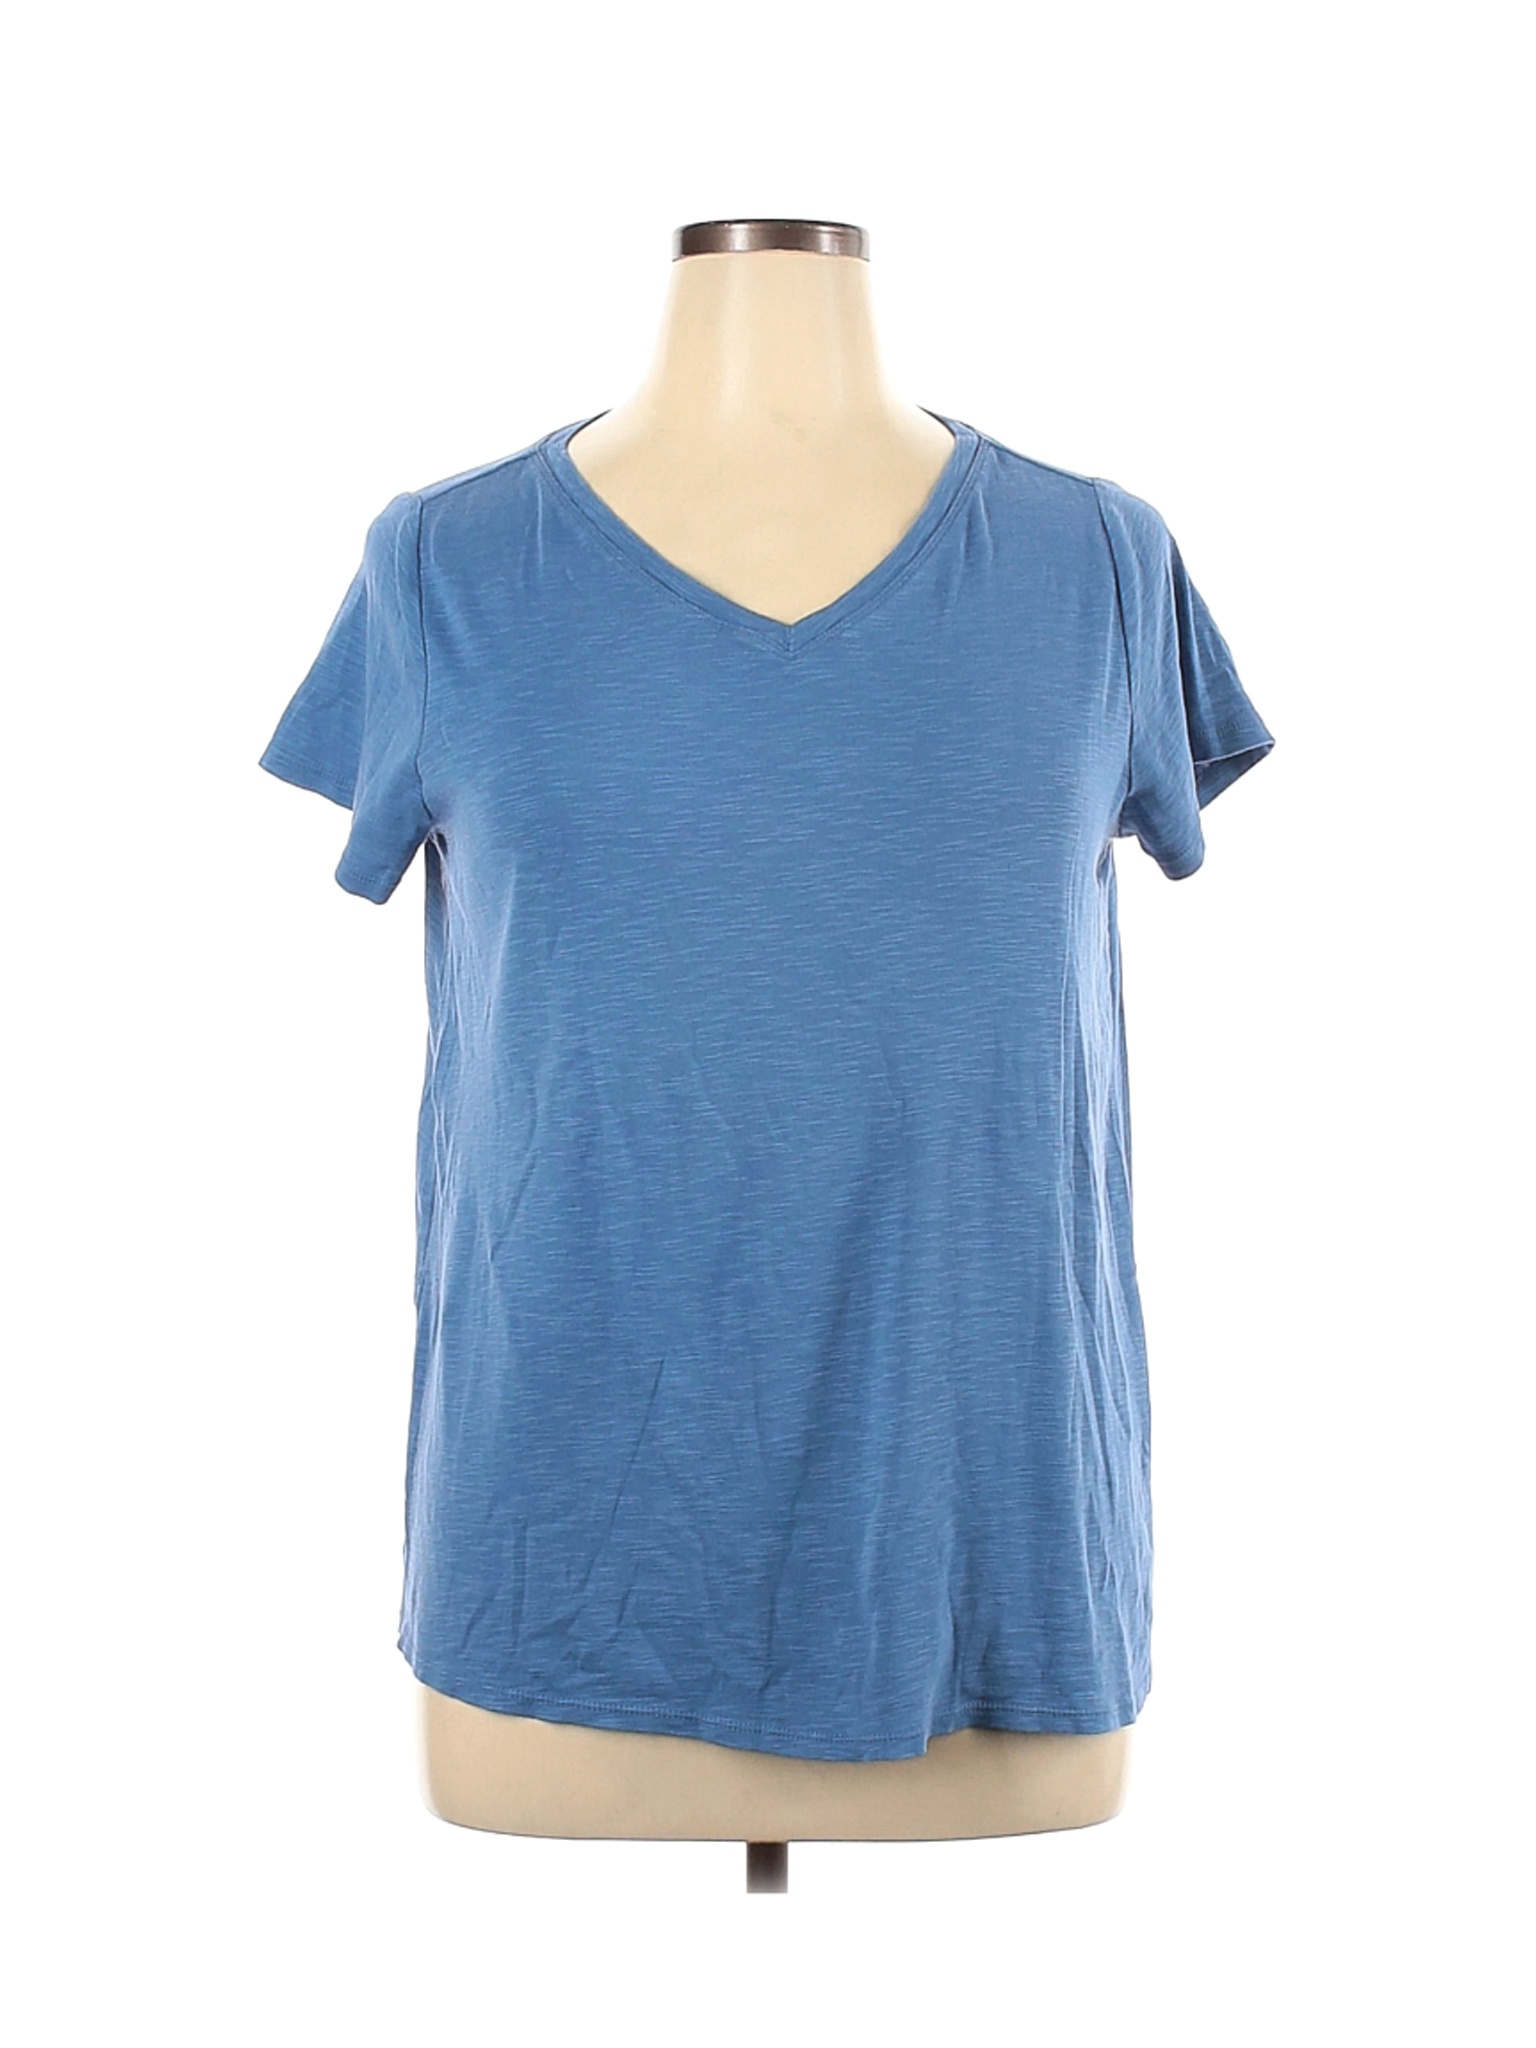 J.Jill Women Blue Short Sleeve T-Shirt 1X Plus | eBay